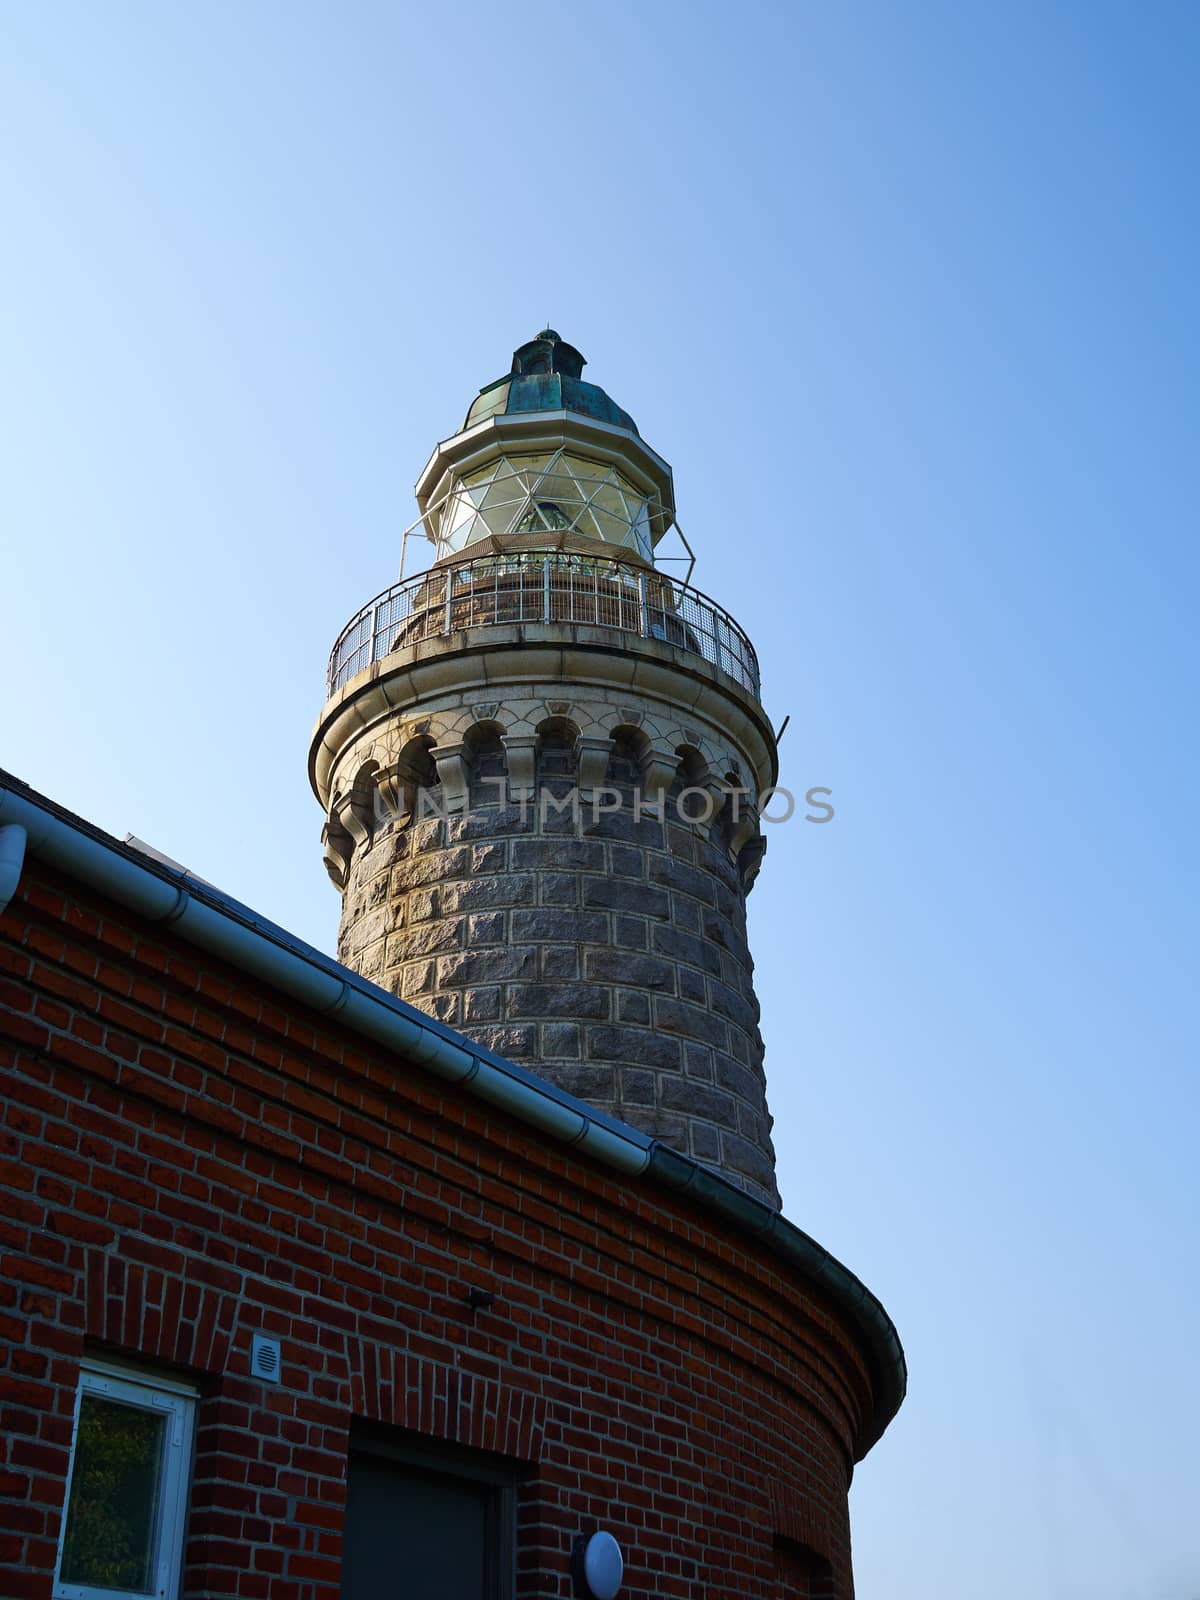 Old stone traditional lighthouse on the beach the island of Aeroe Denmark